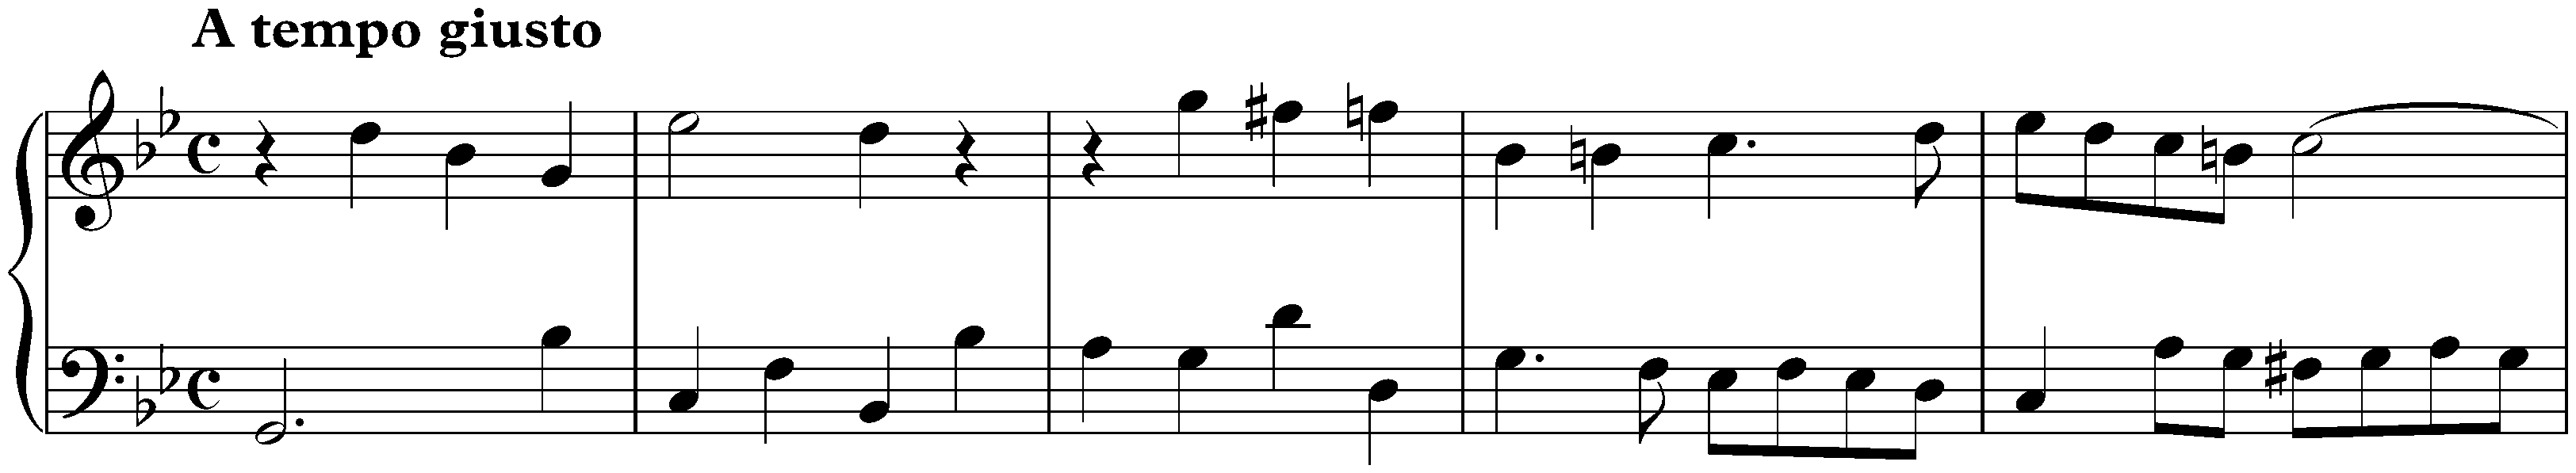 Sonatina in G minor, HWV 583